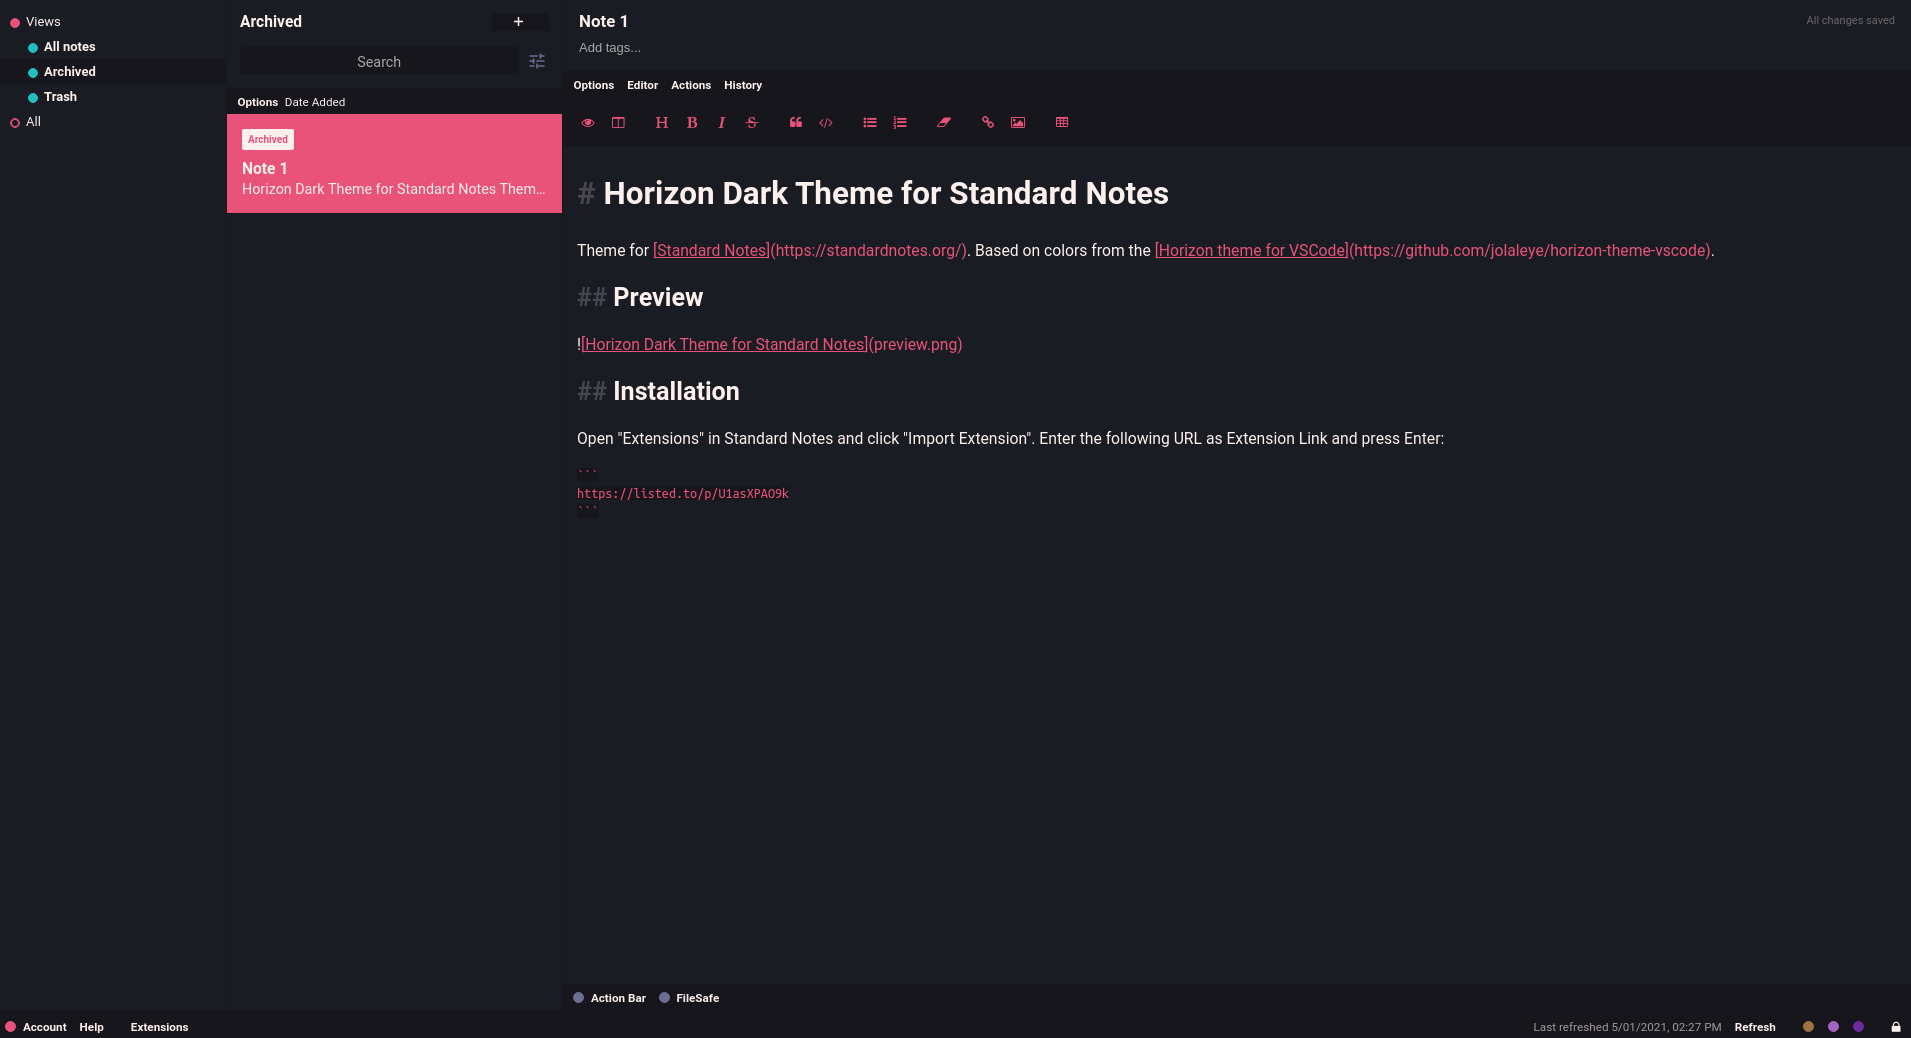 Horizon Dark Theme for Standard Notes